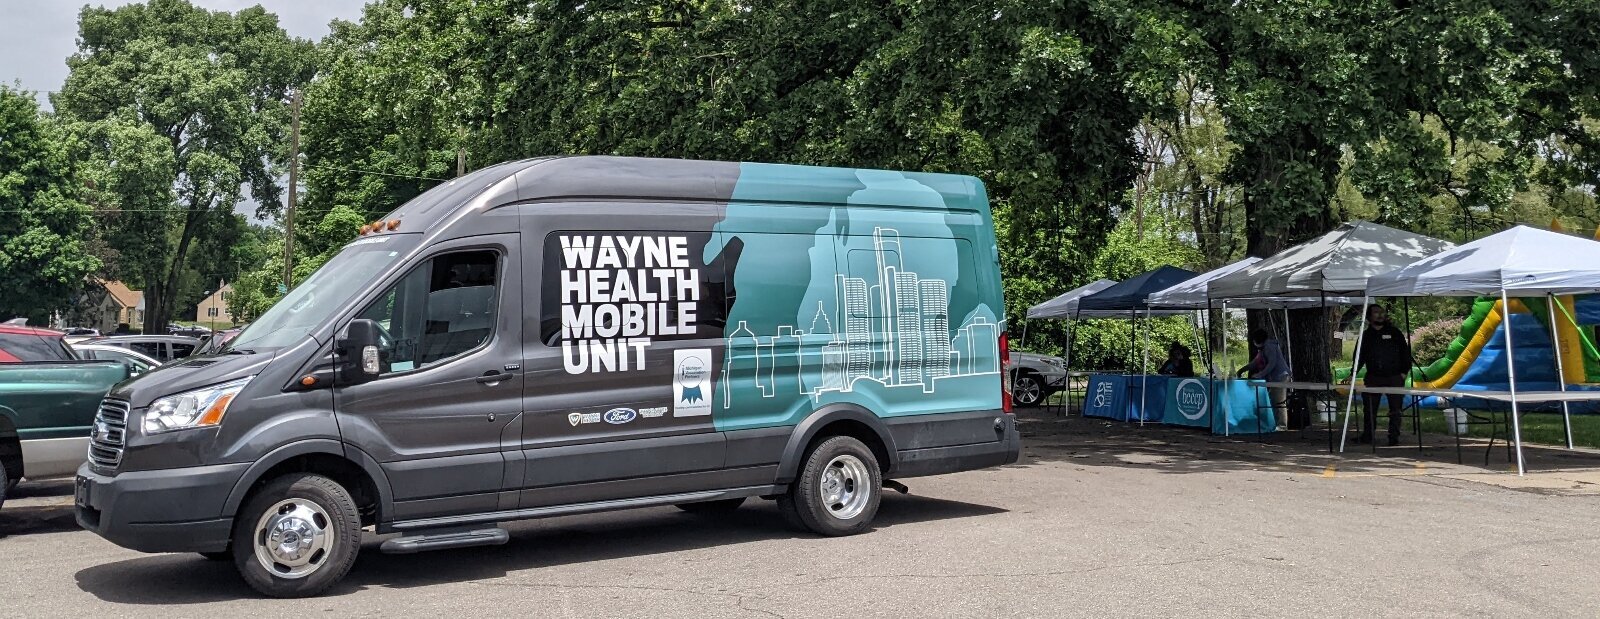 The Wayne Health Mobile Unit (WHMU).